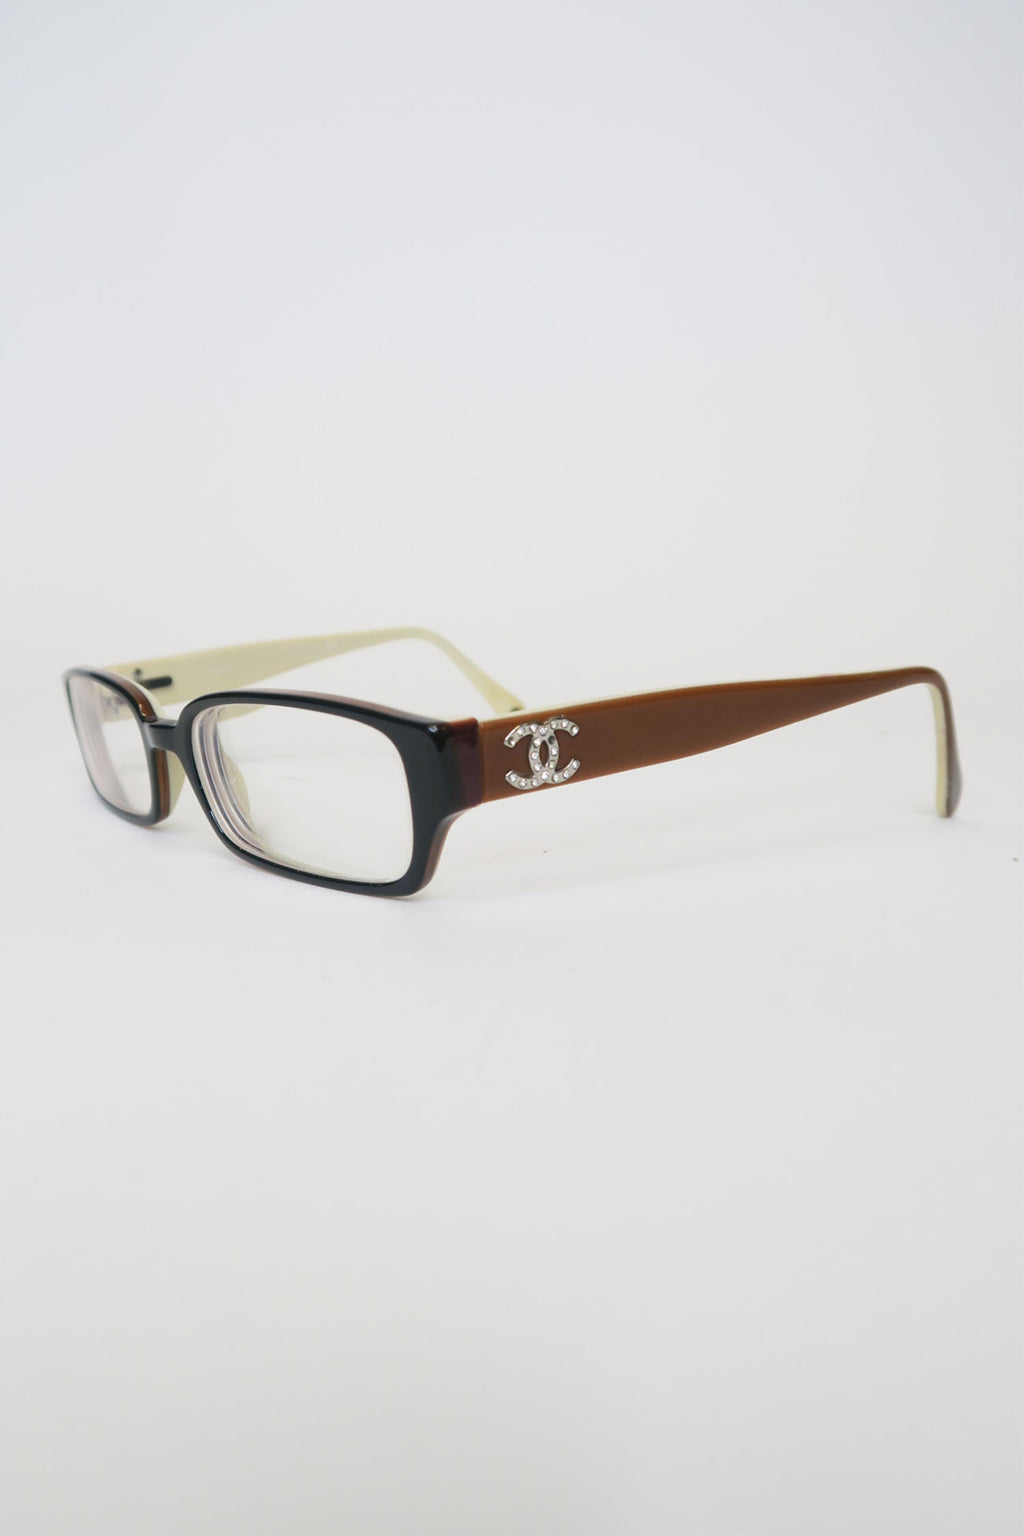 Chanel Vintage Interlocking CC Logo Eyeglasses